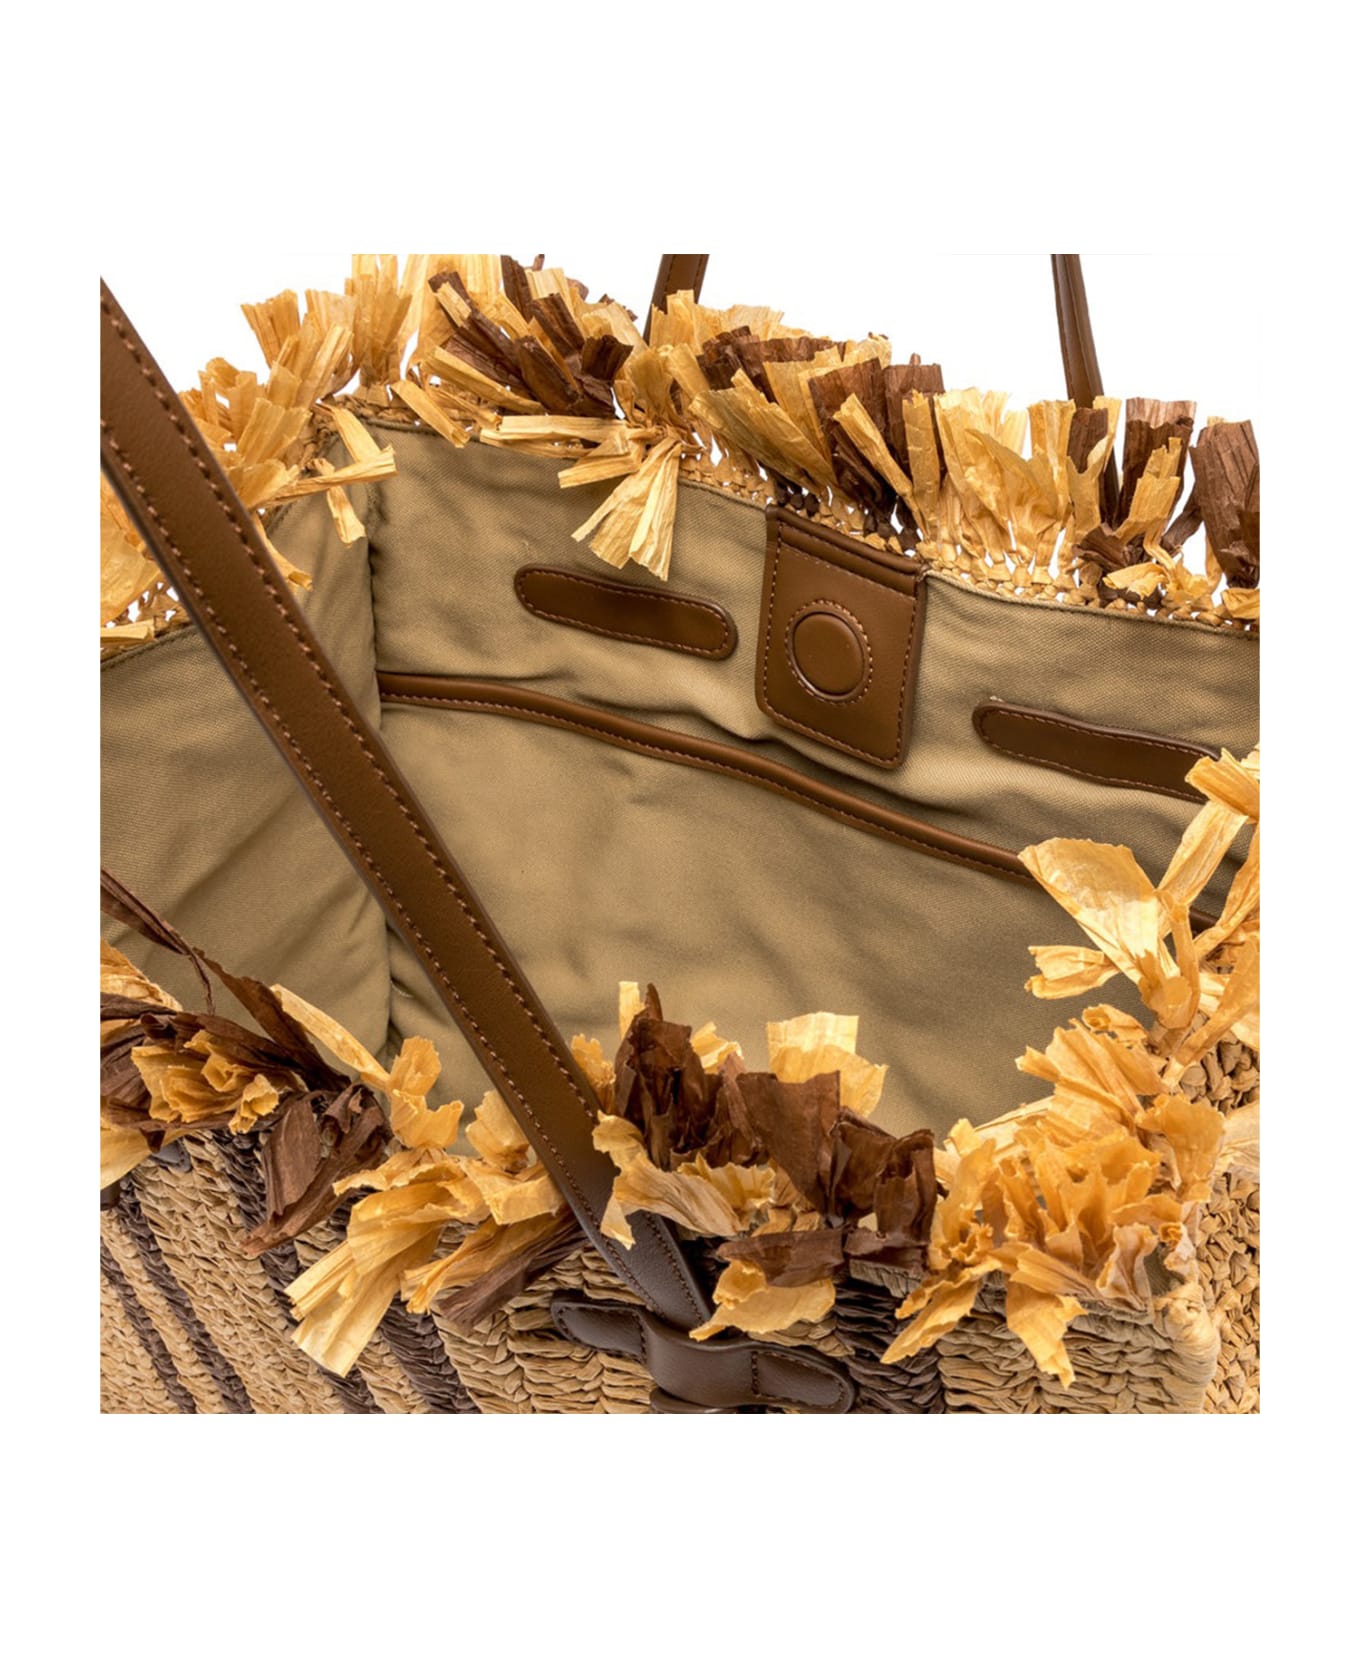 Gianni Chiarini Marcella Shopping Bag With Straw Effect - CAFFE